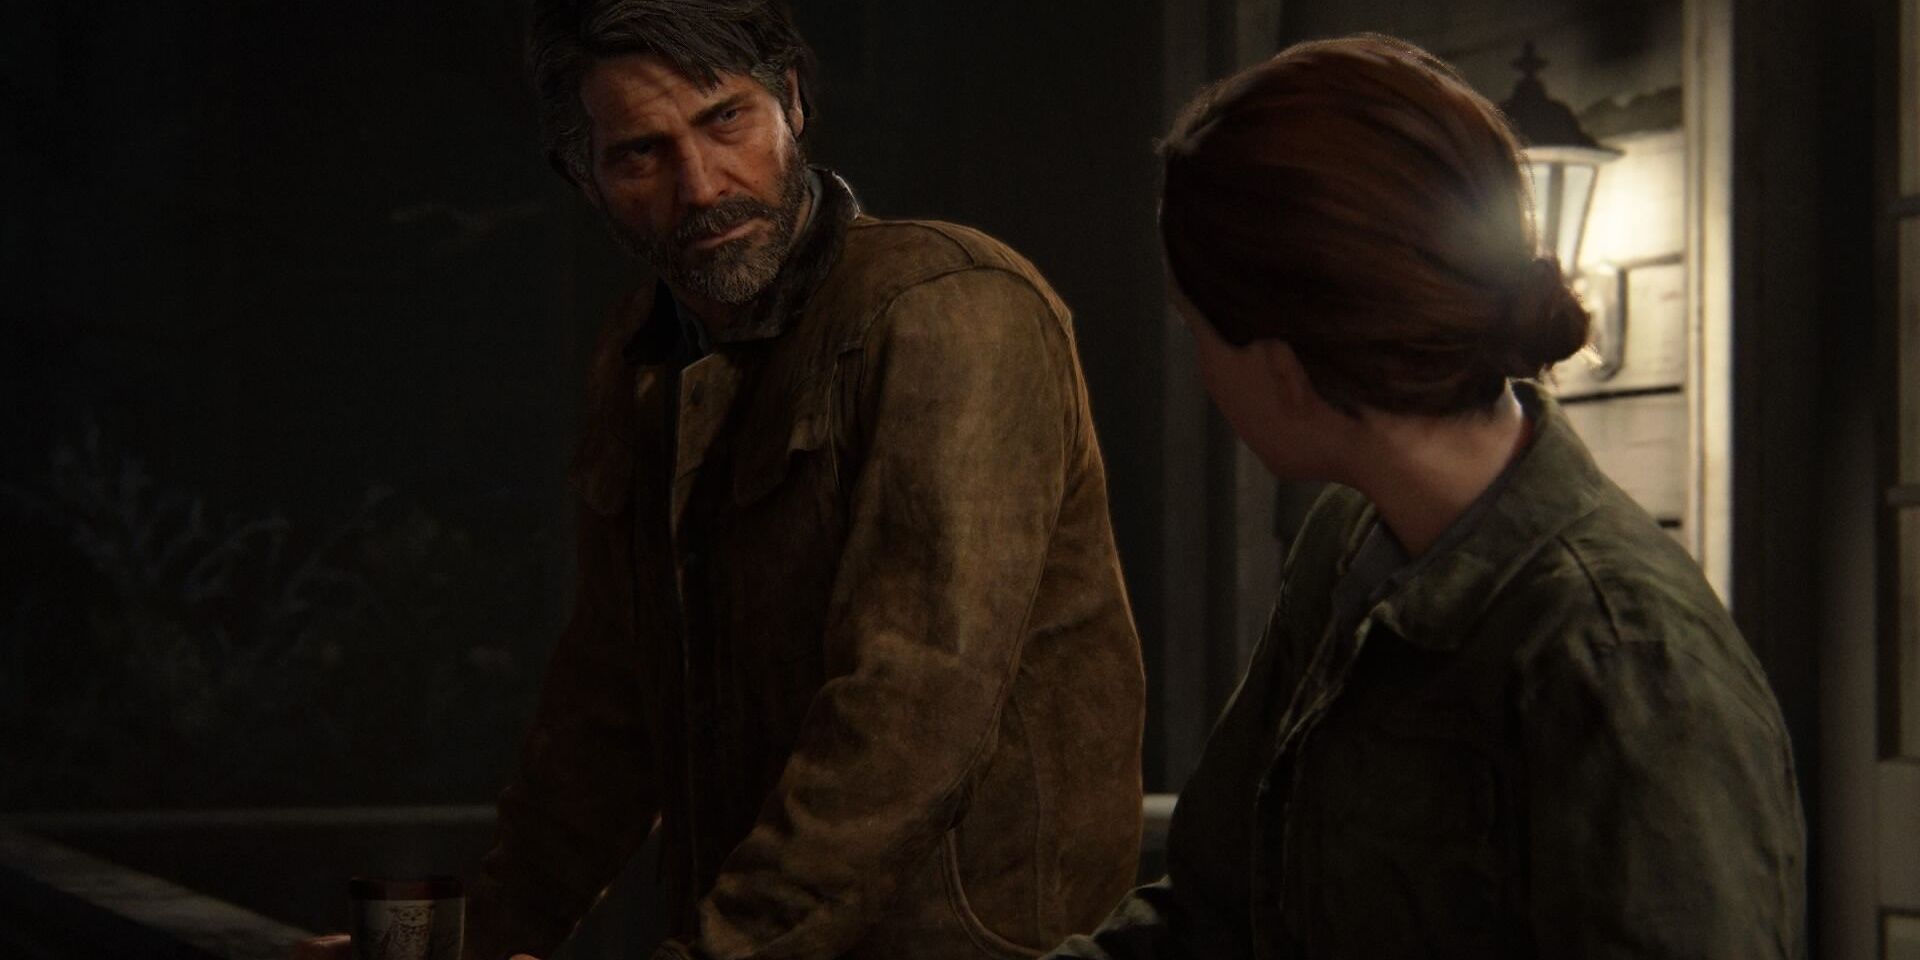 Joel argues with Ellie in The Last of Us Part II